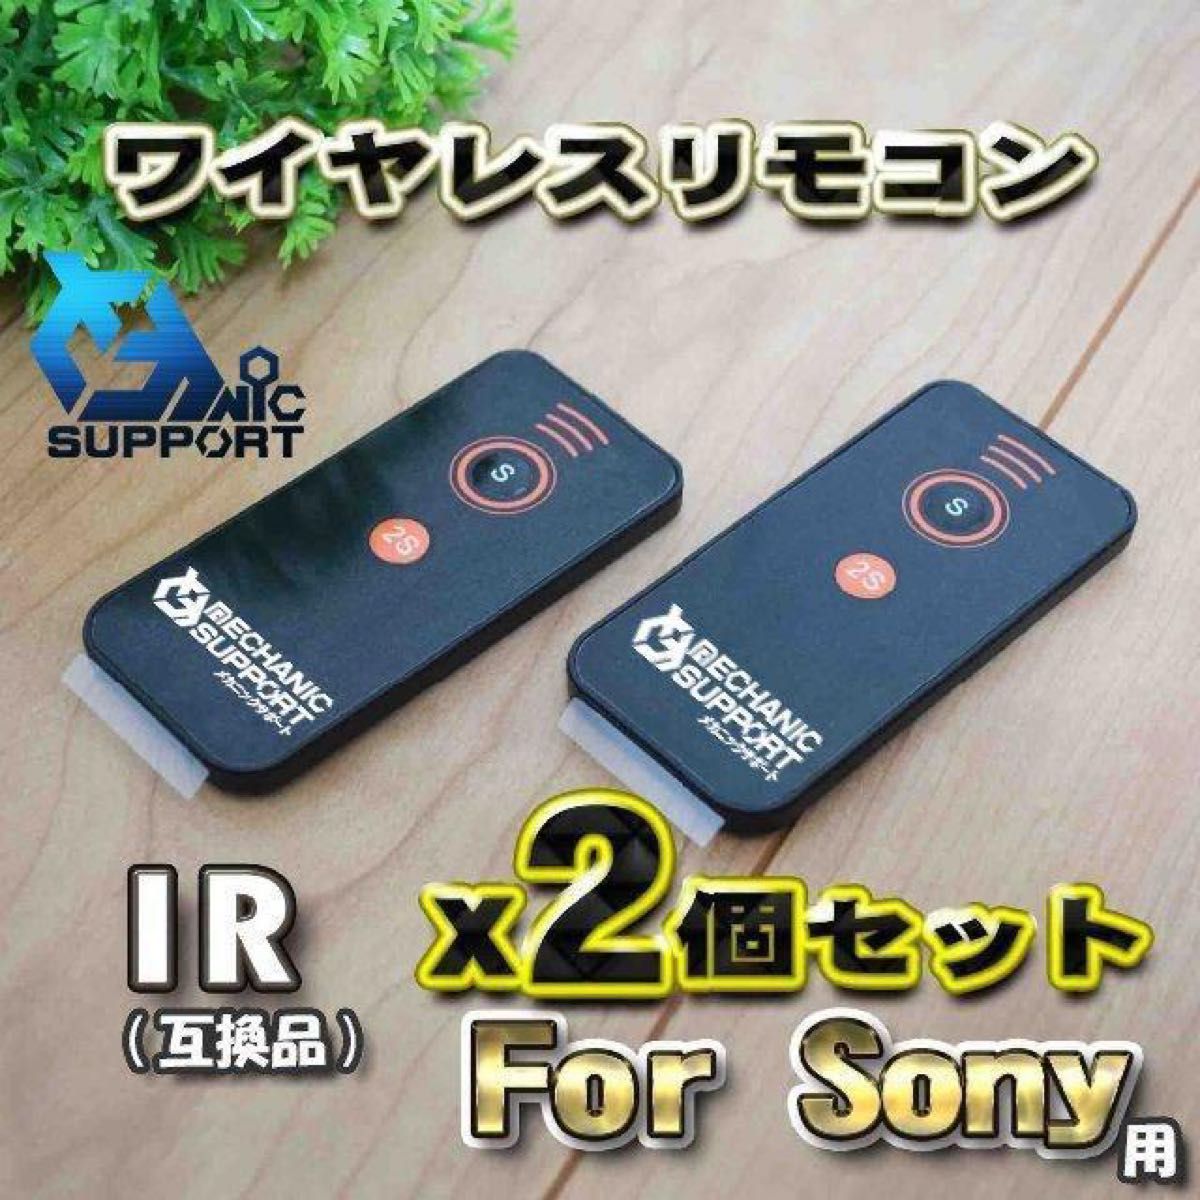 Sony 対応 ir 互換シャッター無線 アルファ カメラ ソニー 用 x2個